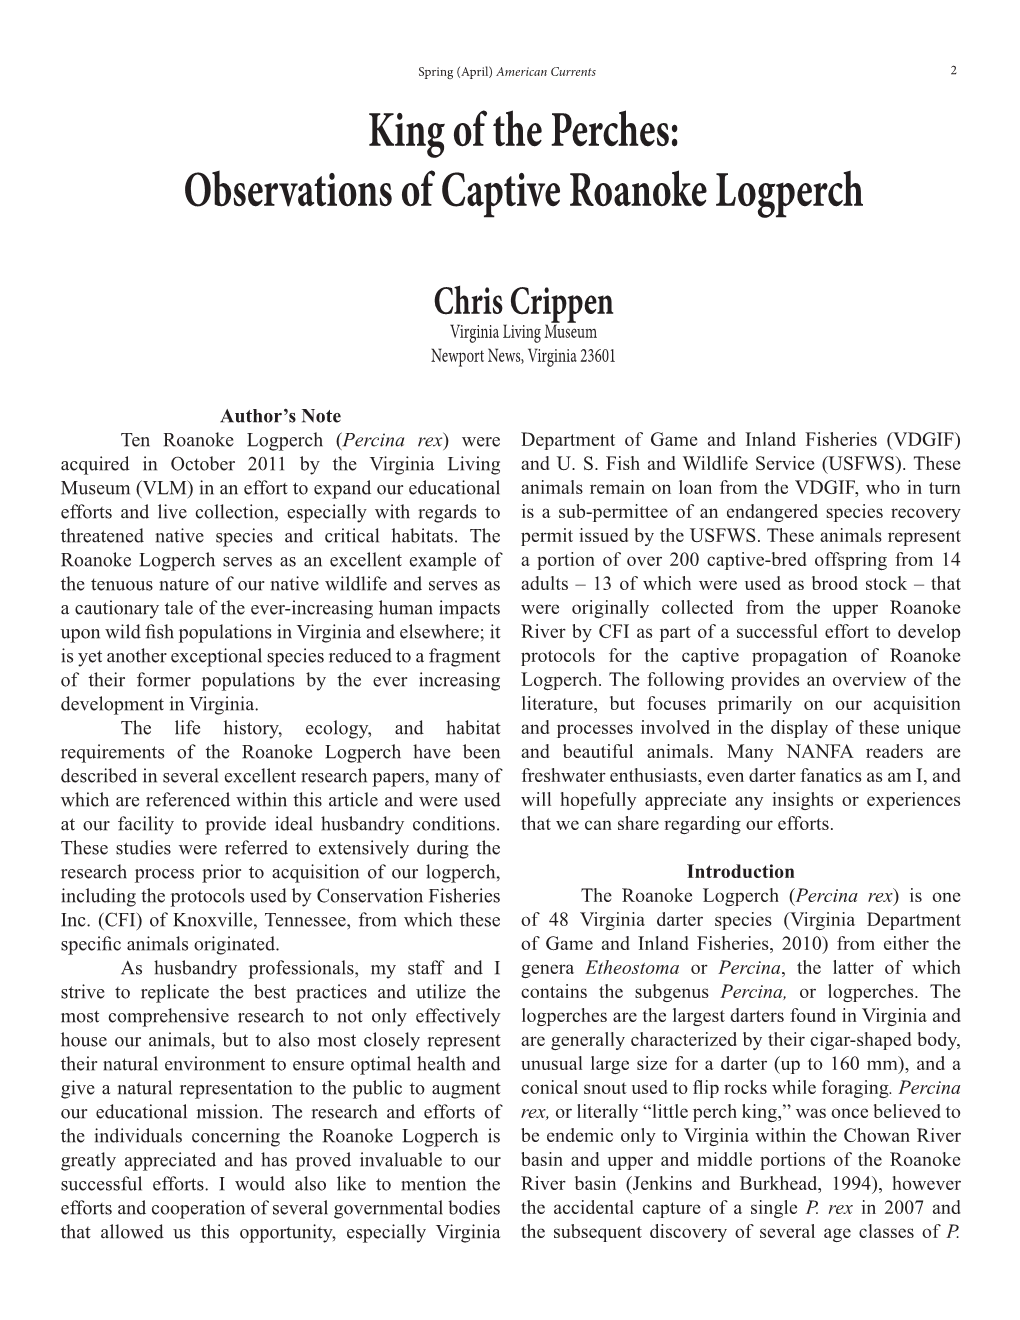 Observations of Captive Roanoke Logperch